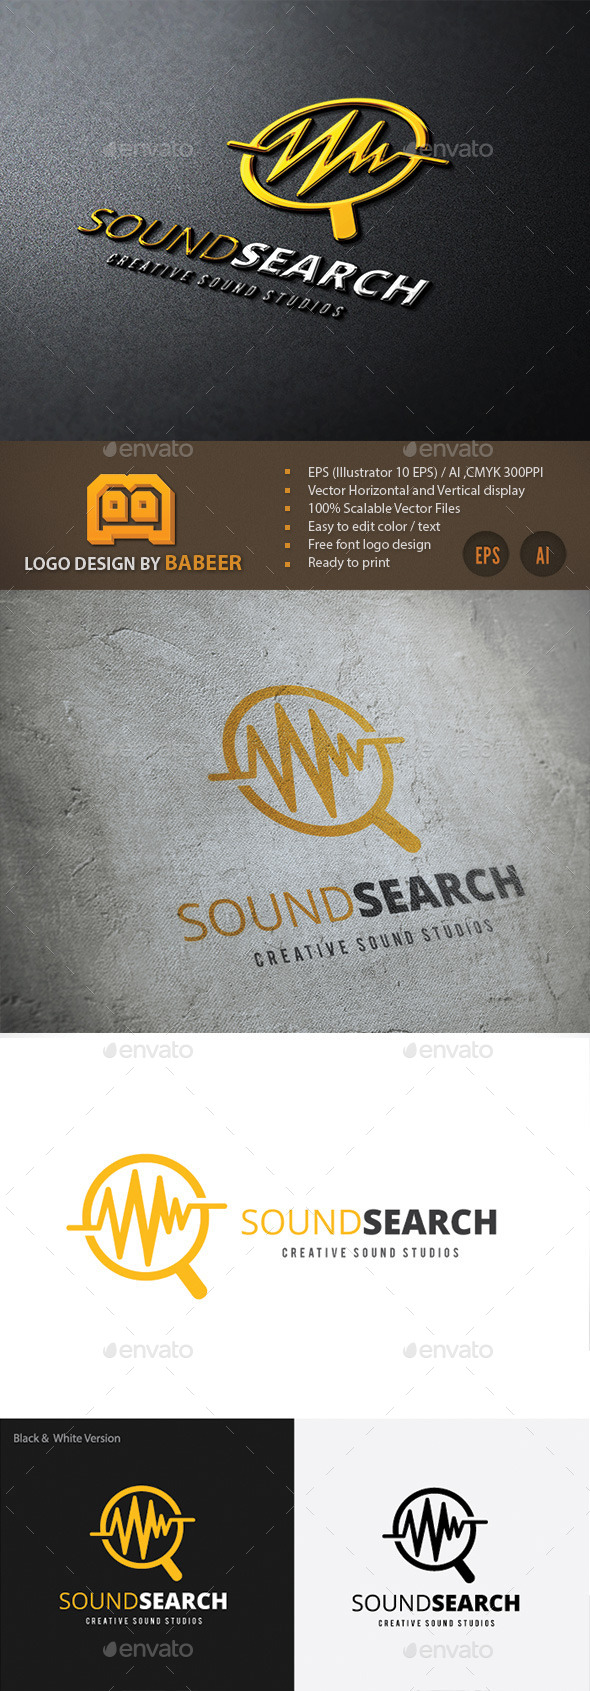 Sound Search